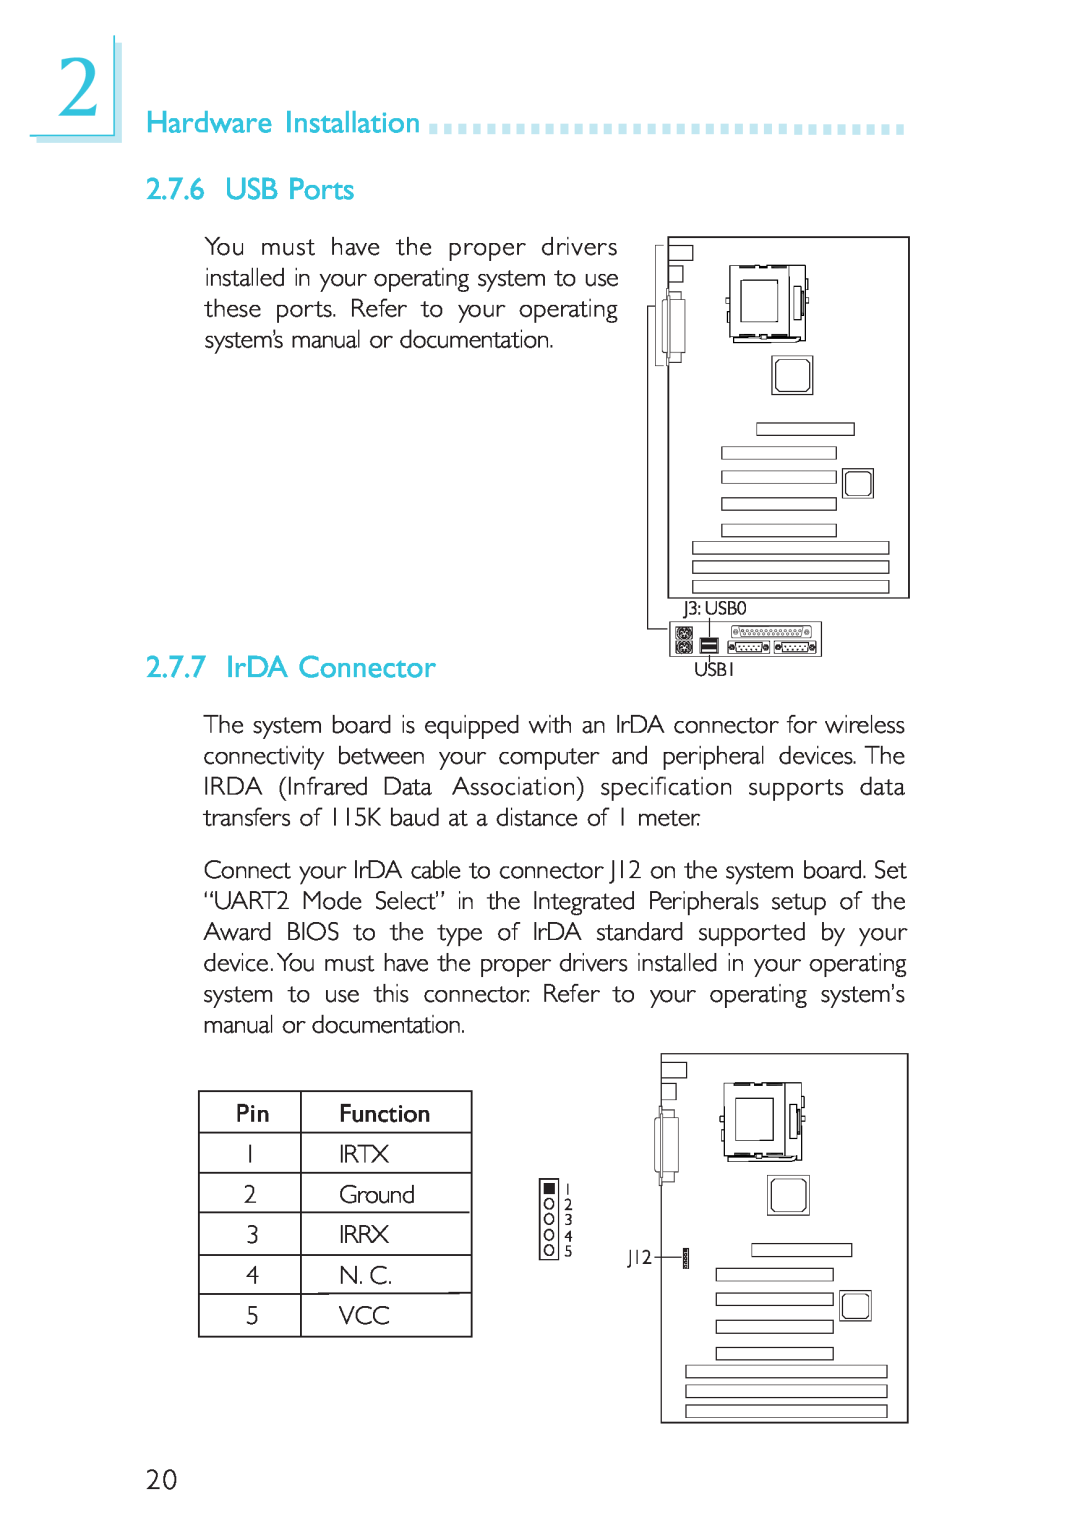 Intel CB60-BX, CB60-ZX manual Hardware Installation 2.7.6 USB Ports, IrDA Connector 